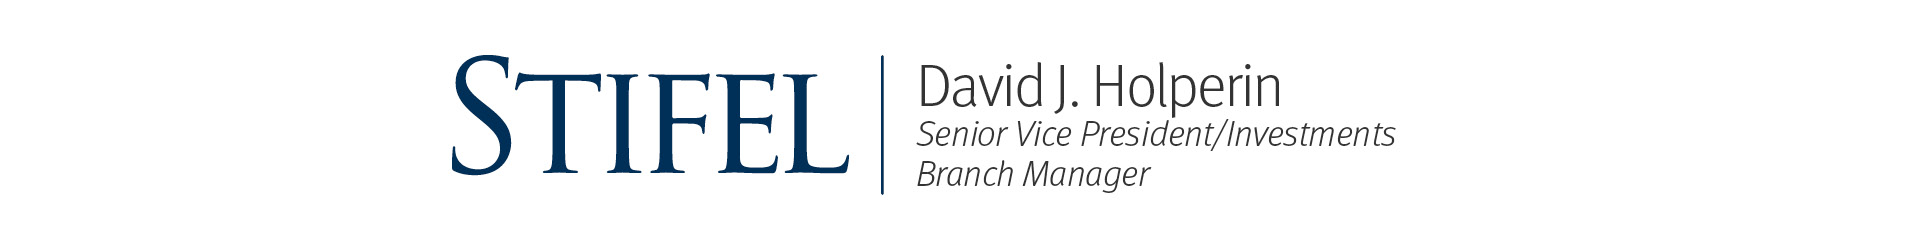 Stifel | David Holperin, Senior Vice President/Investments, Branch Manager